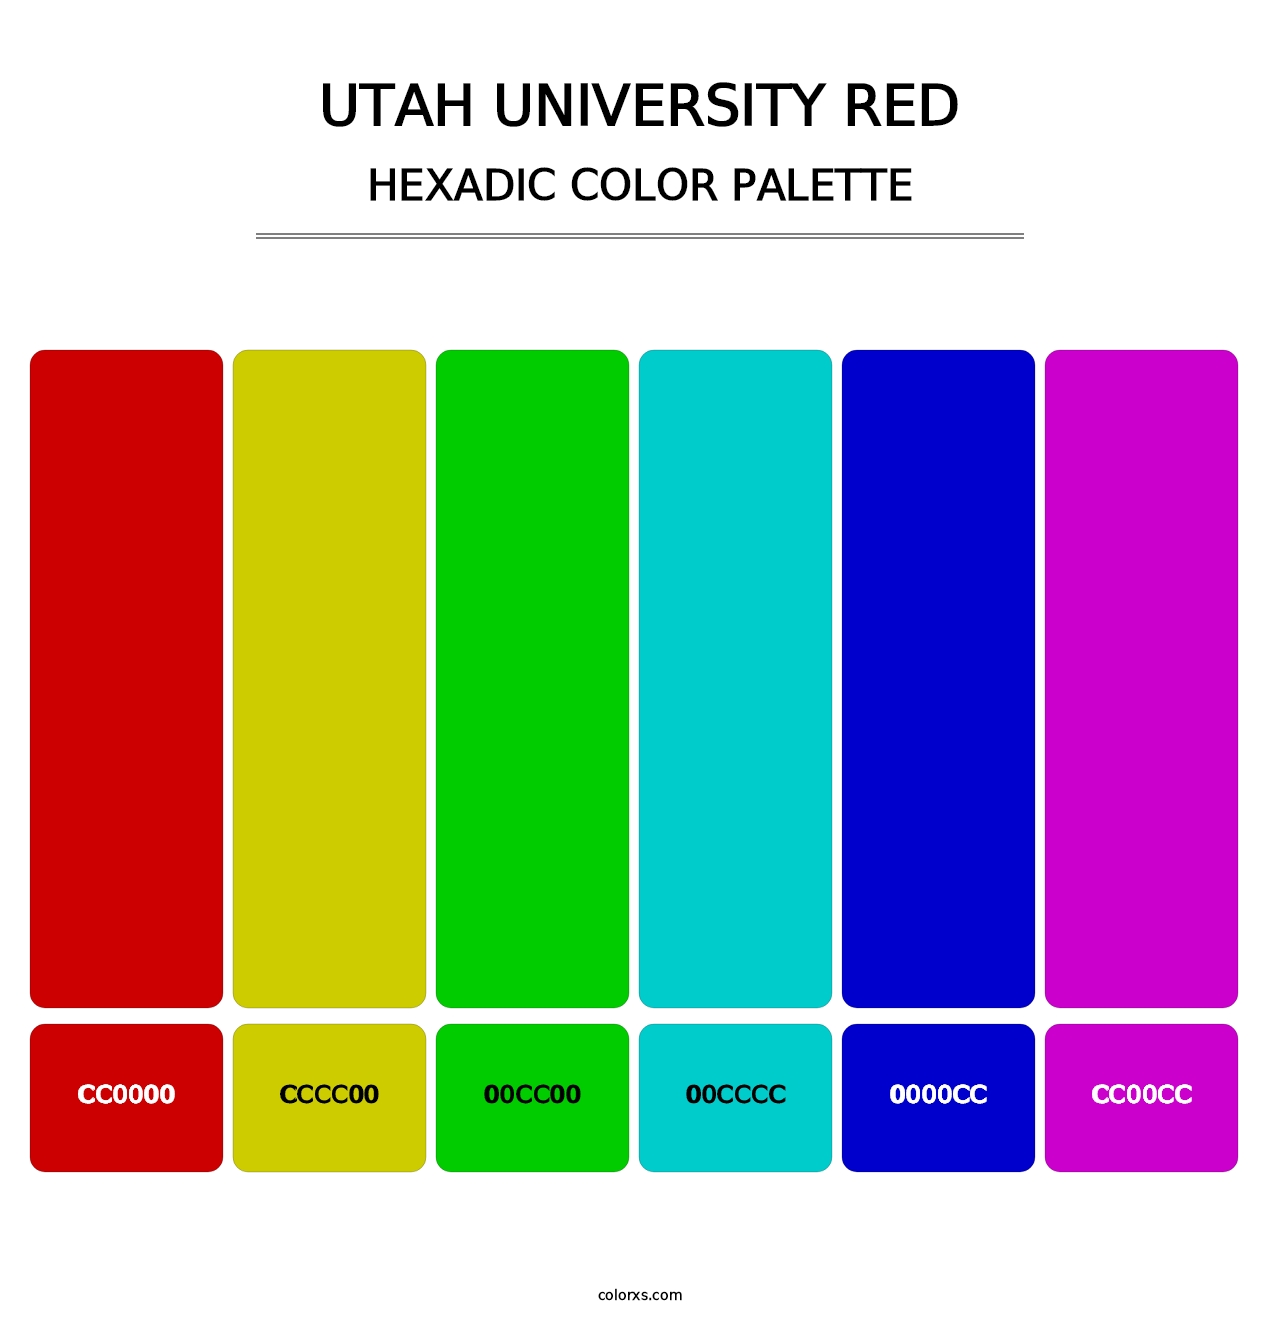 Utah University Red - Hexadic Color Palette